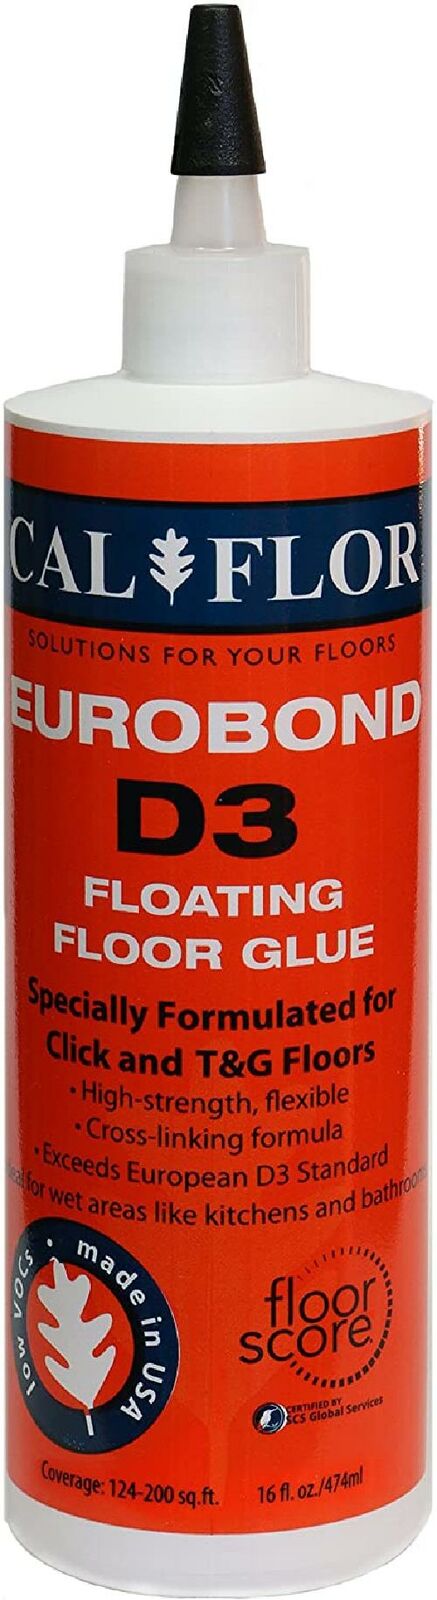 Cal-flor Gl82114cf Eurobond D3 Floating Floor Glue